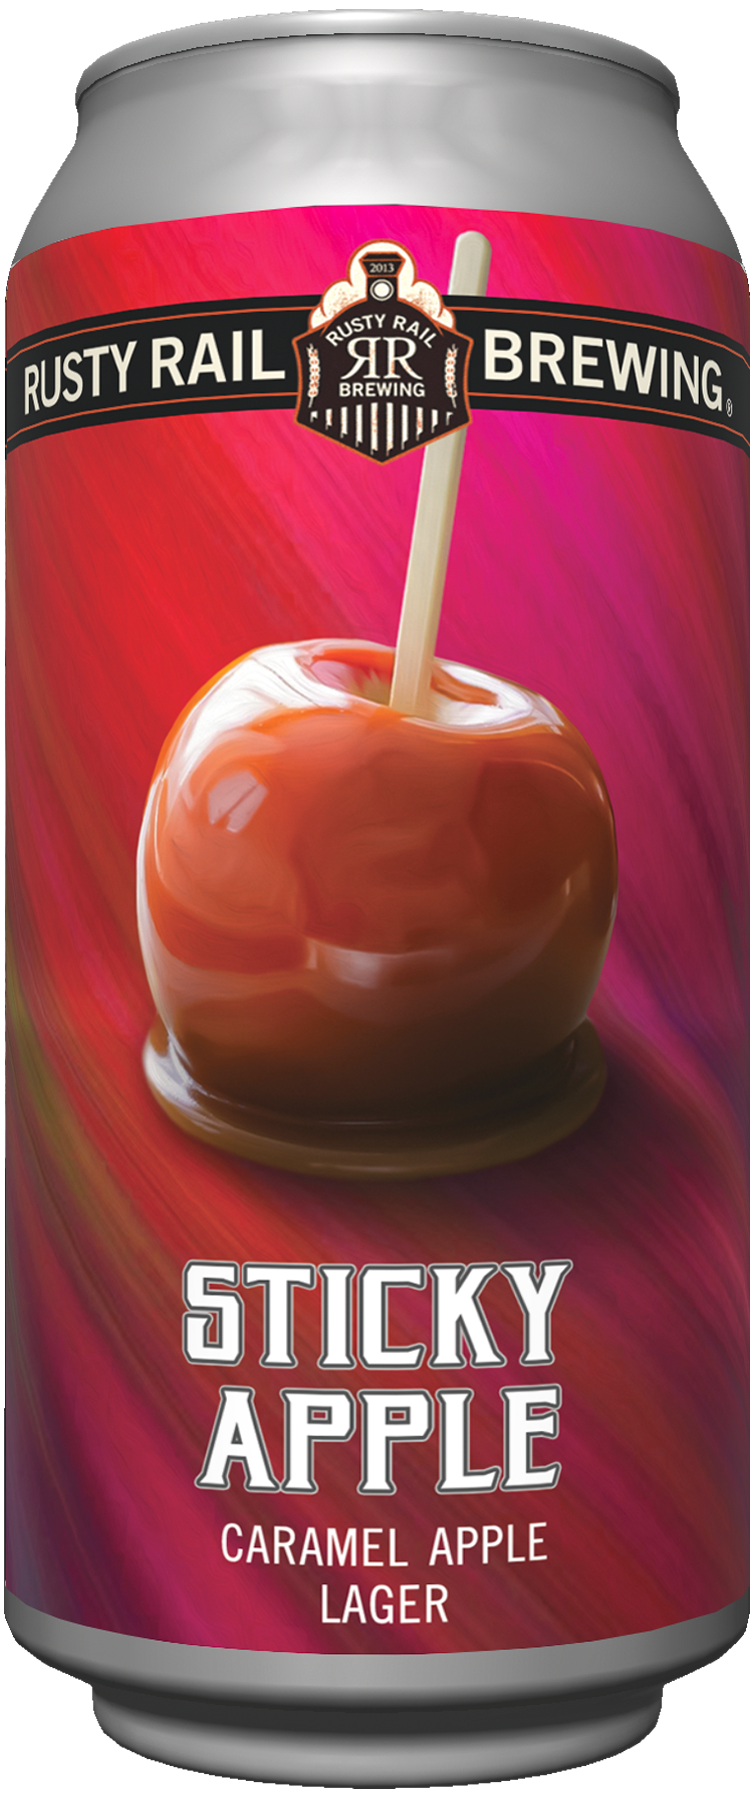 Sticky Apple - Caramel Apple Lager